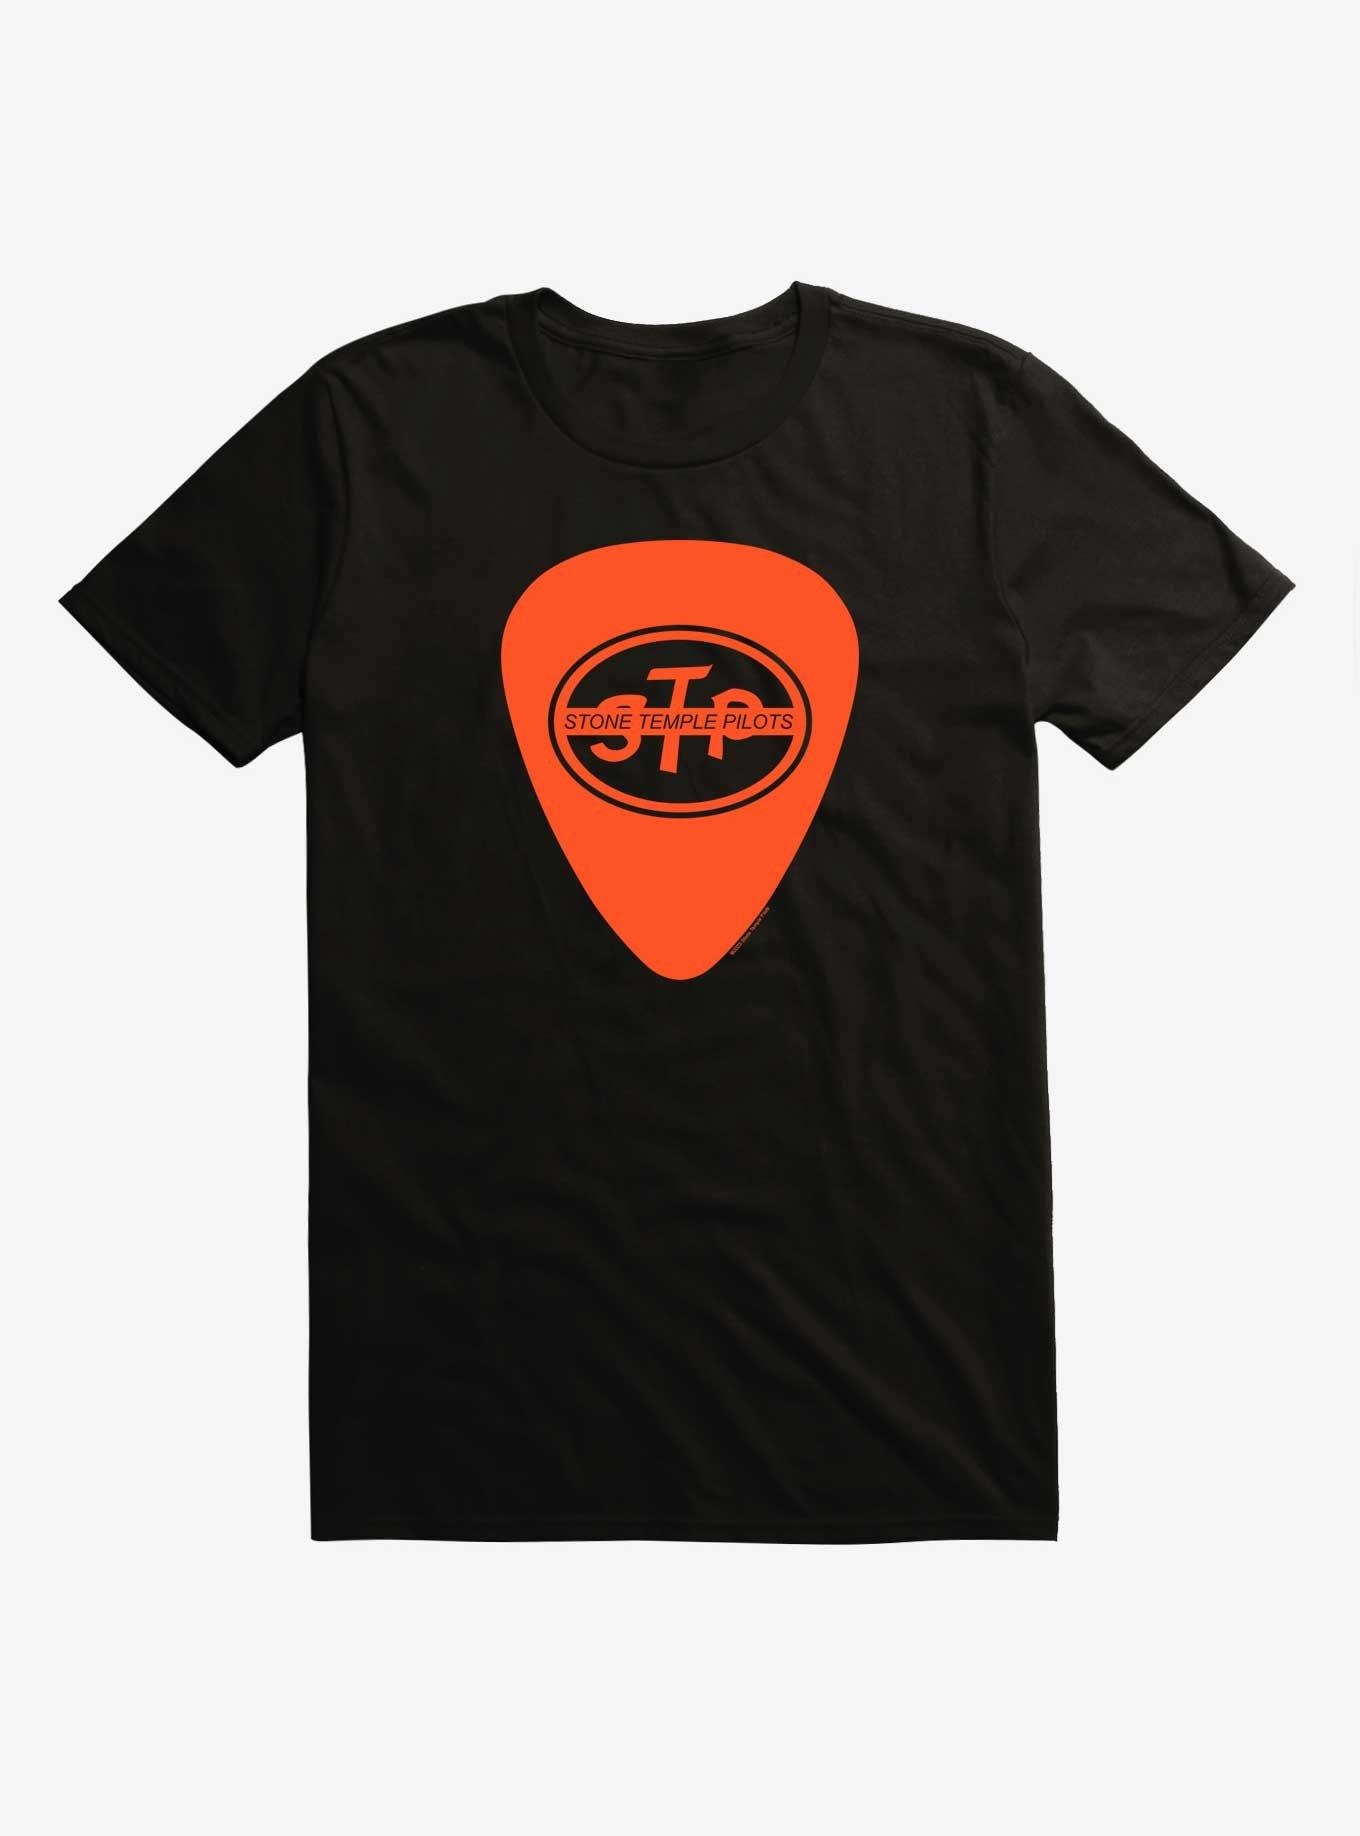 Stone Temple Pilots Guitar Pick T-Shirt, BLACK, hi-res